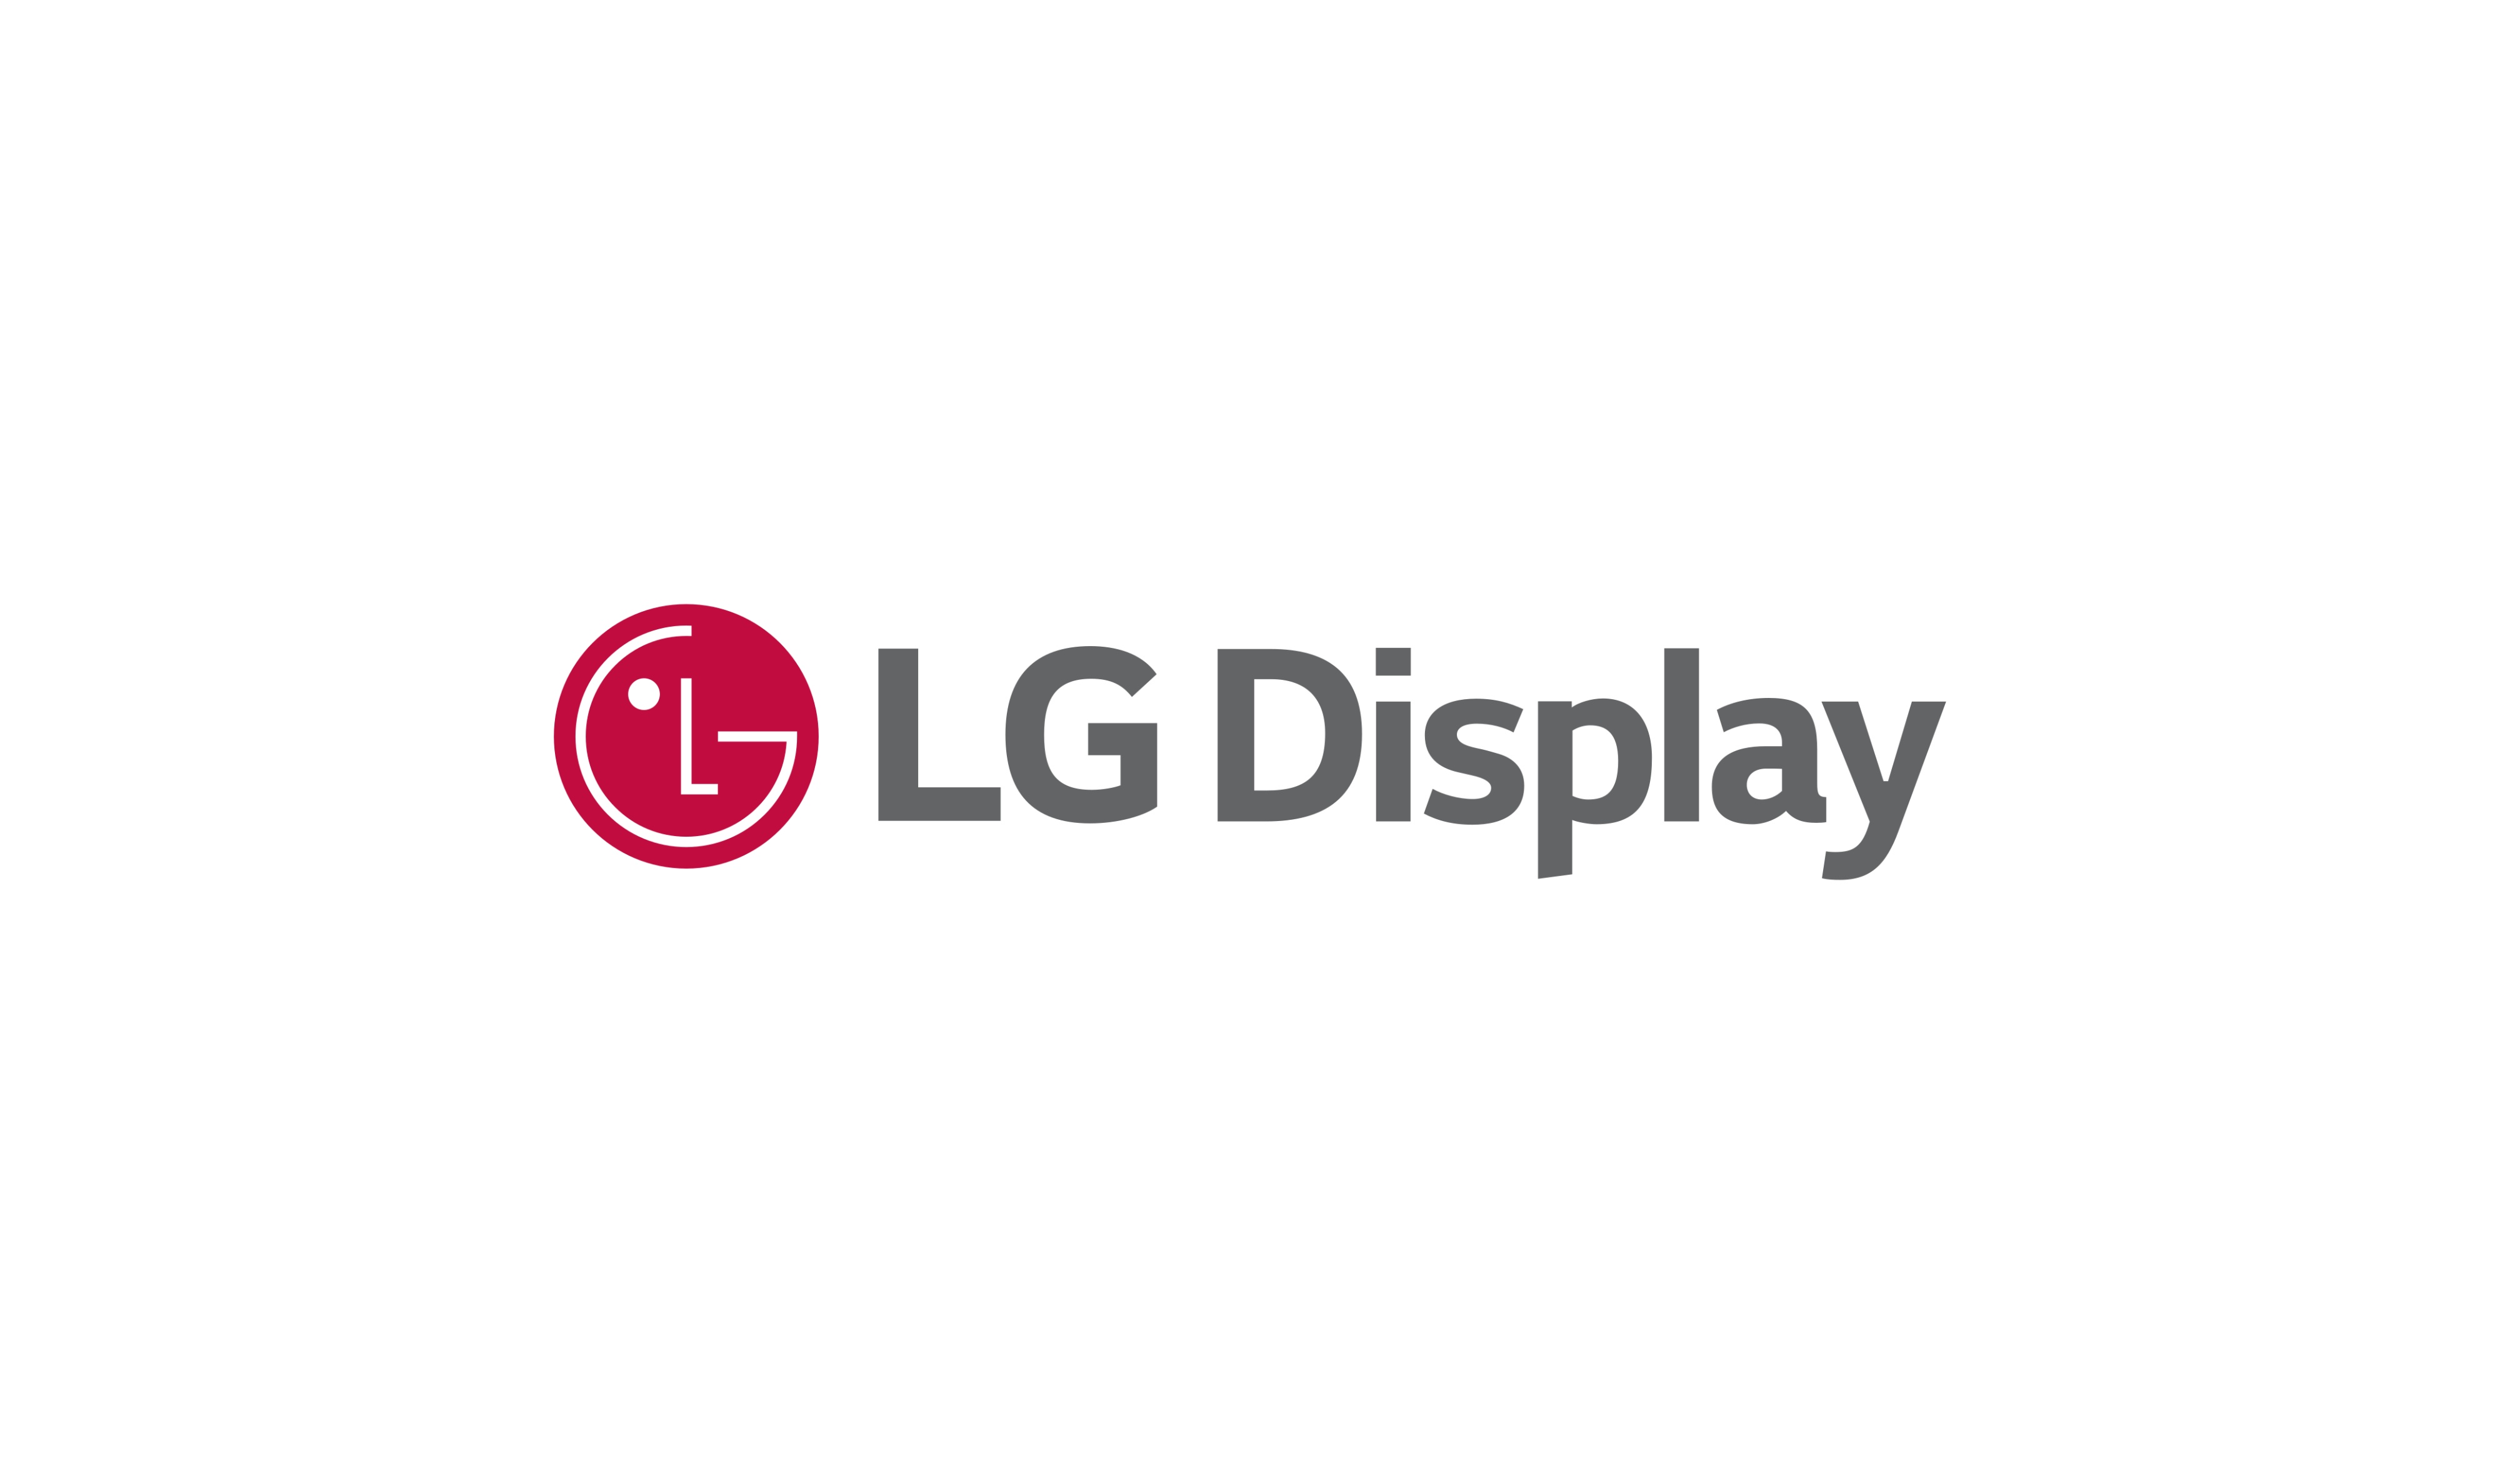 LG Display Logo Featured